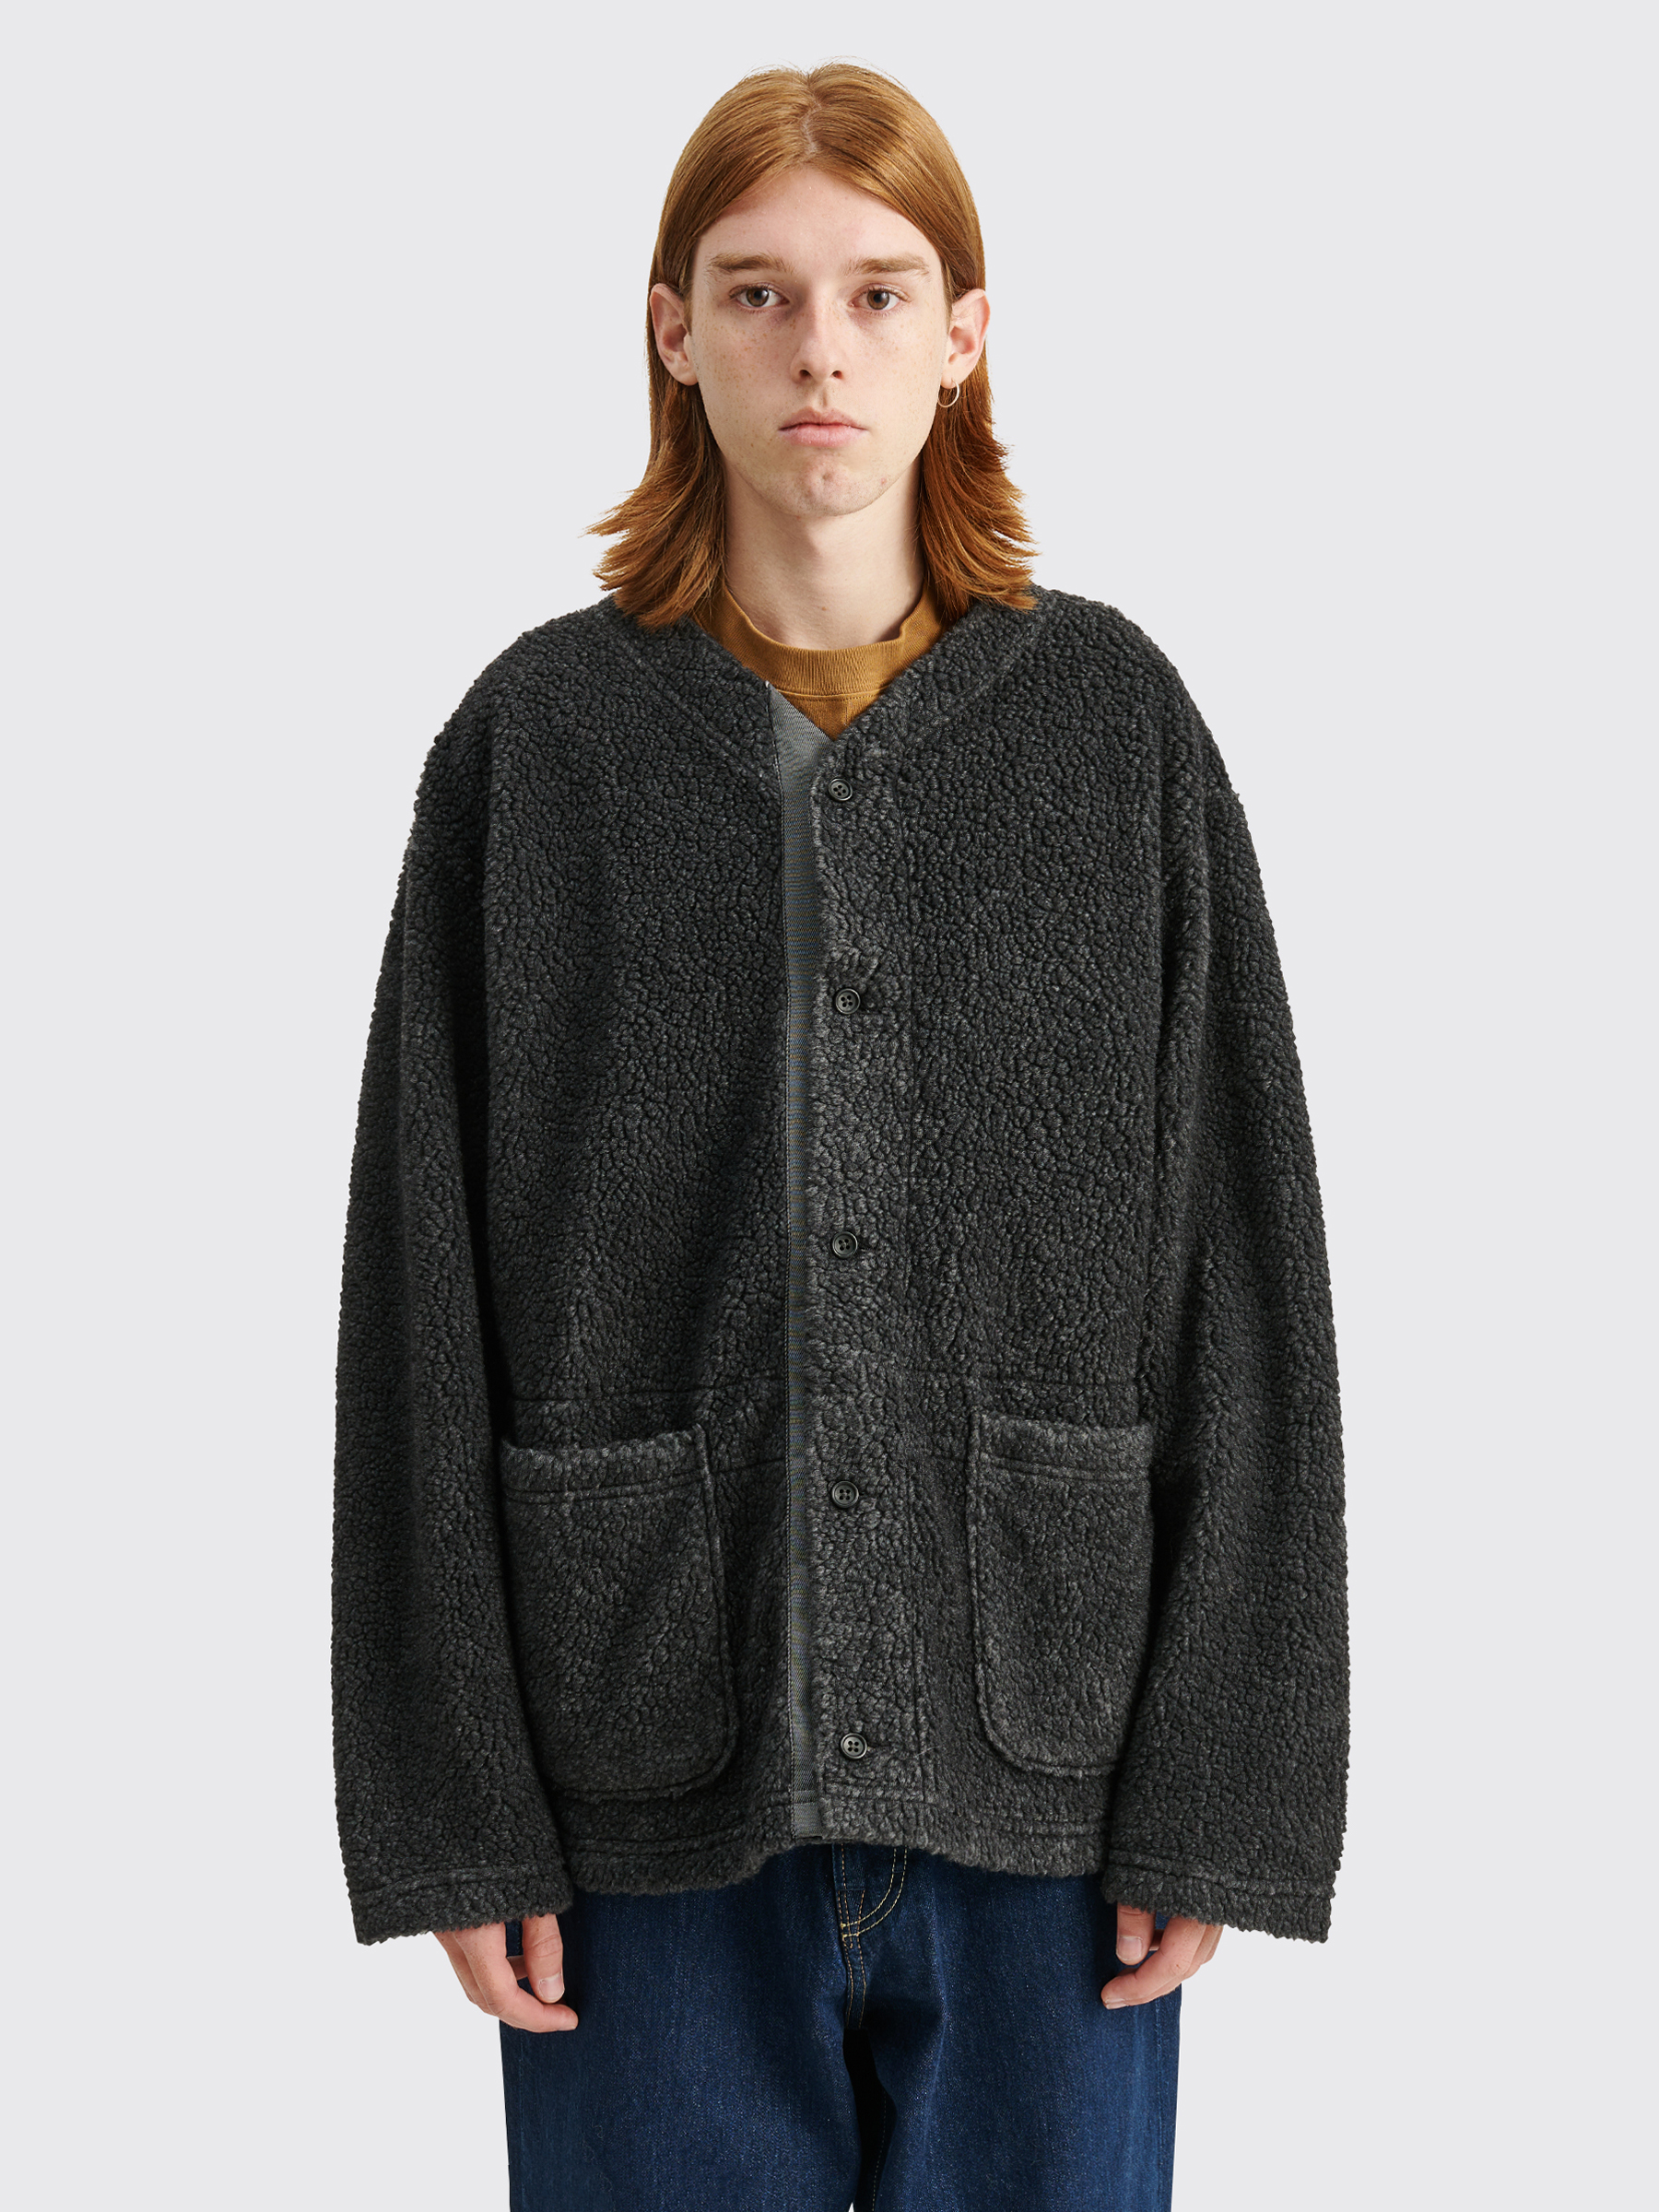 Très Bien - Engineered Garments Shaggy Knit Cardigan Charcoal